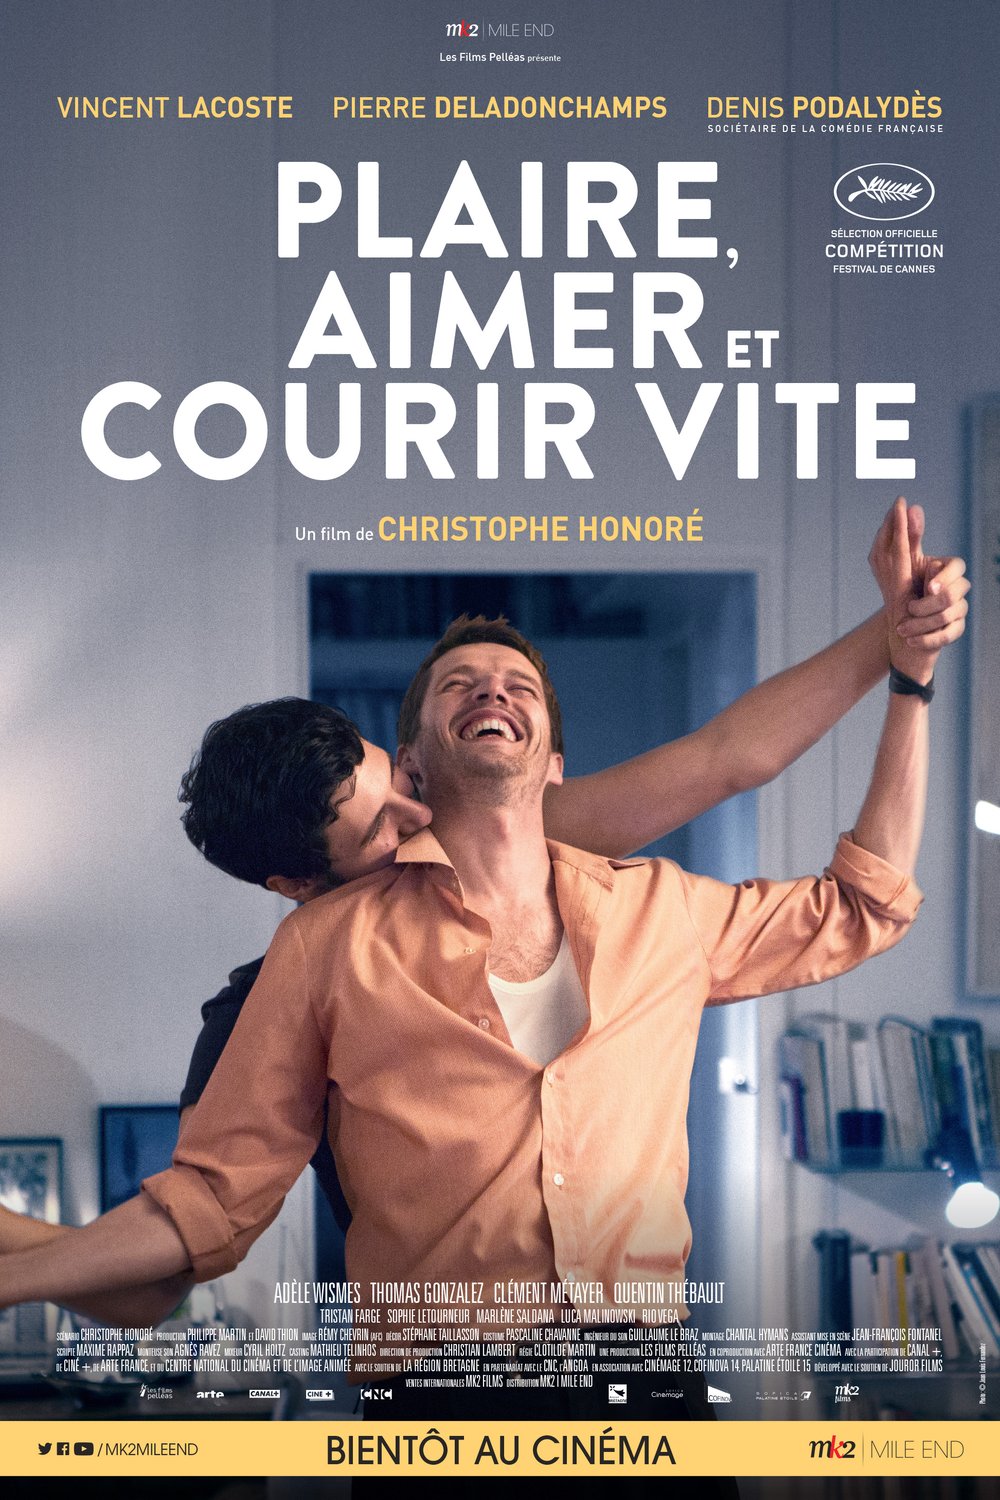 Poster of the movie Plaire, aimer et courir vite